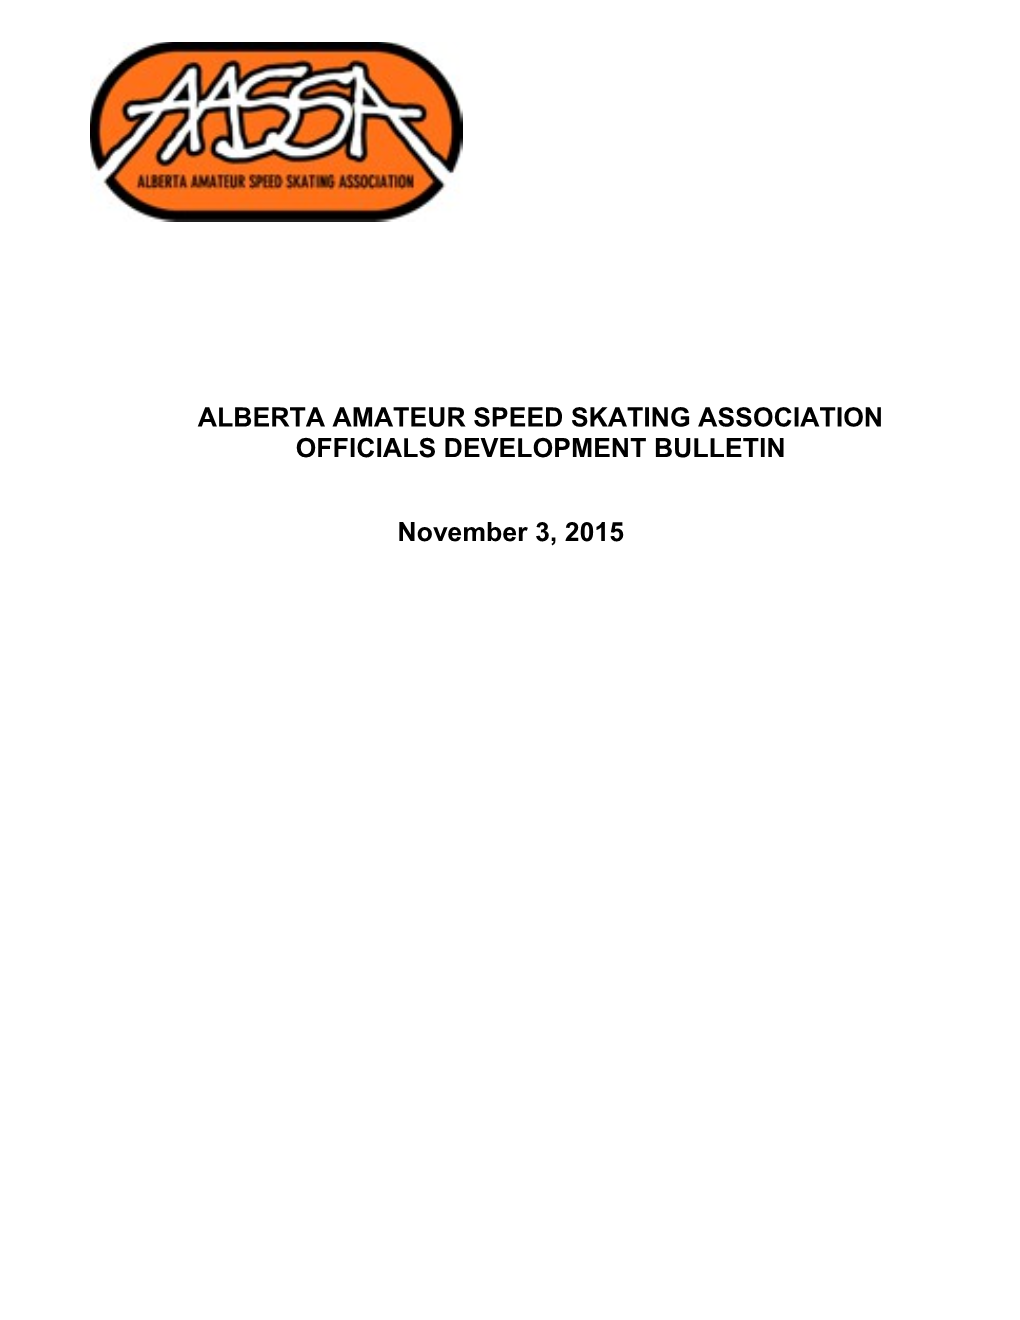 Alberta Amateur Speed Skating Association